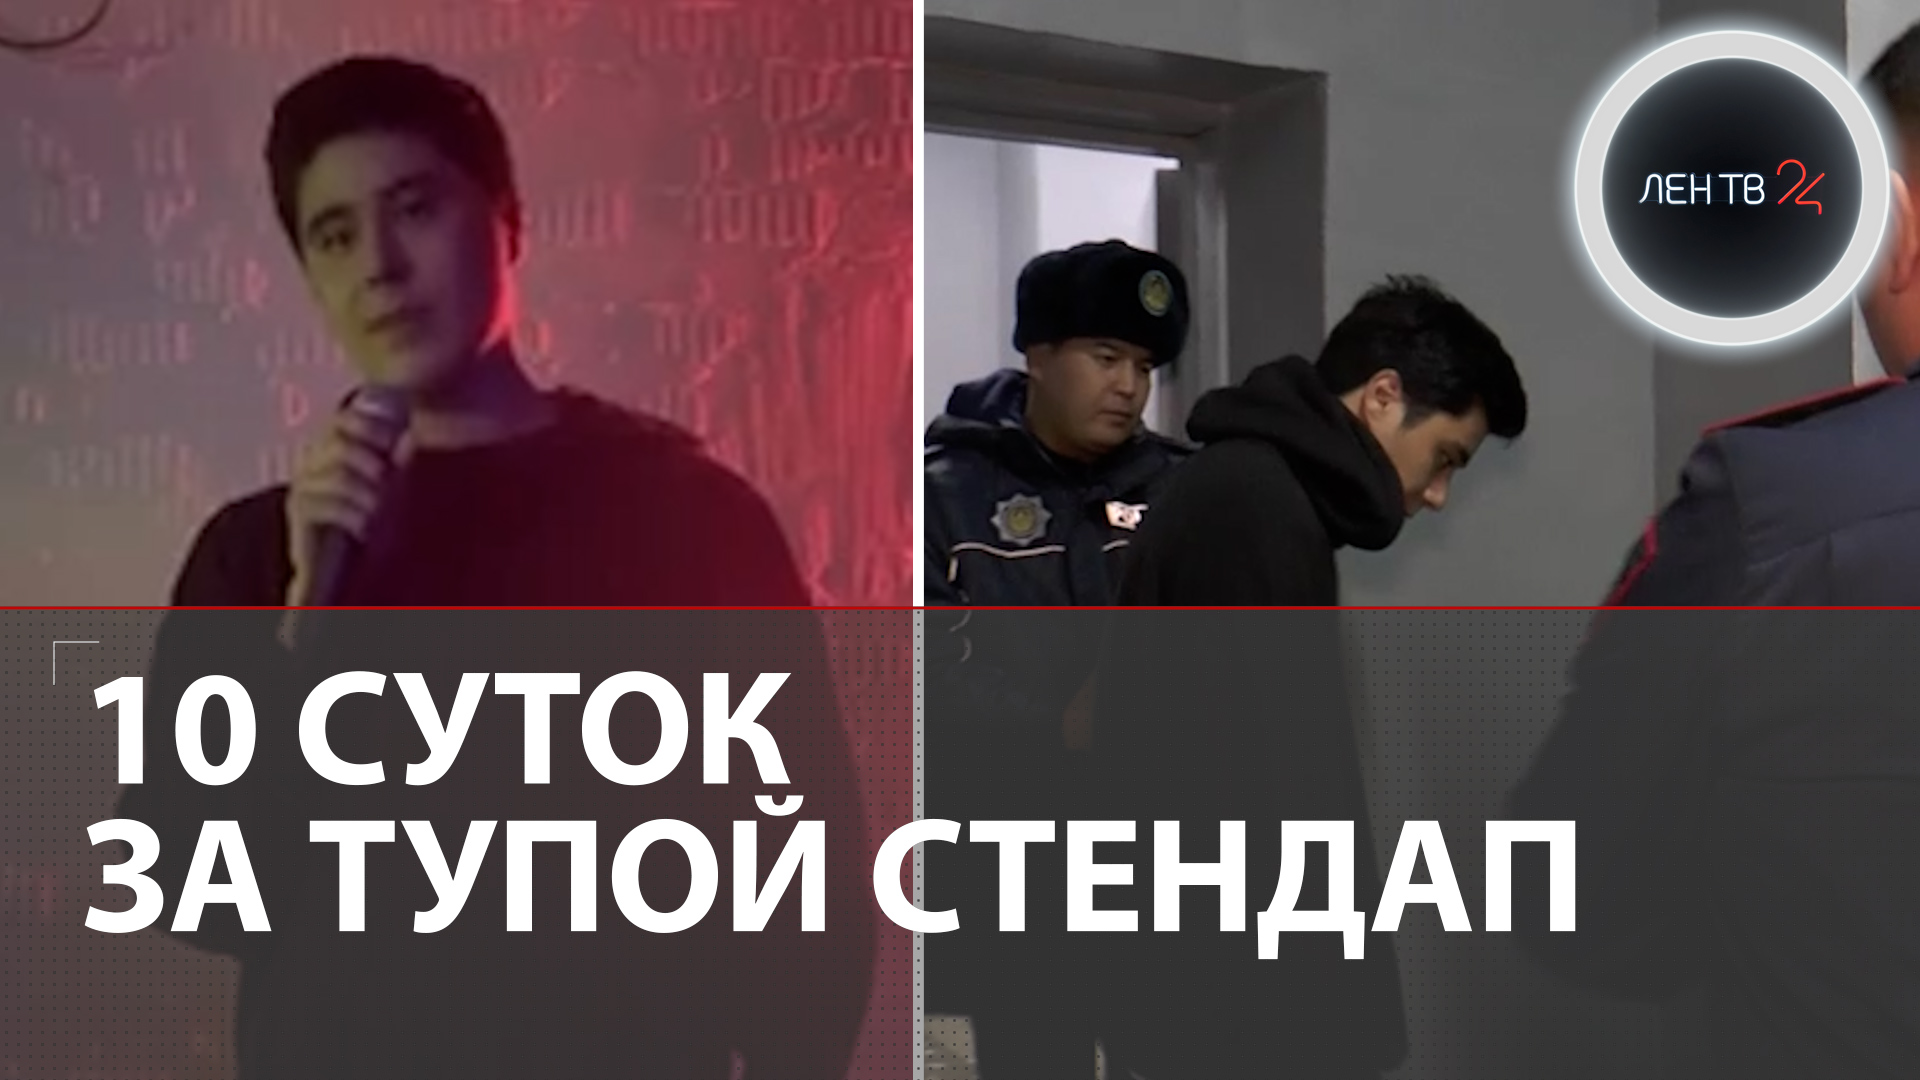 В Казахстане комик Анди Топалидис дошутился до 10 суток ареста | Юморист оскорблял женщин и матерей